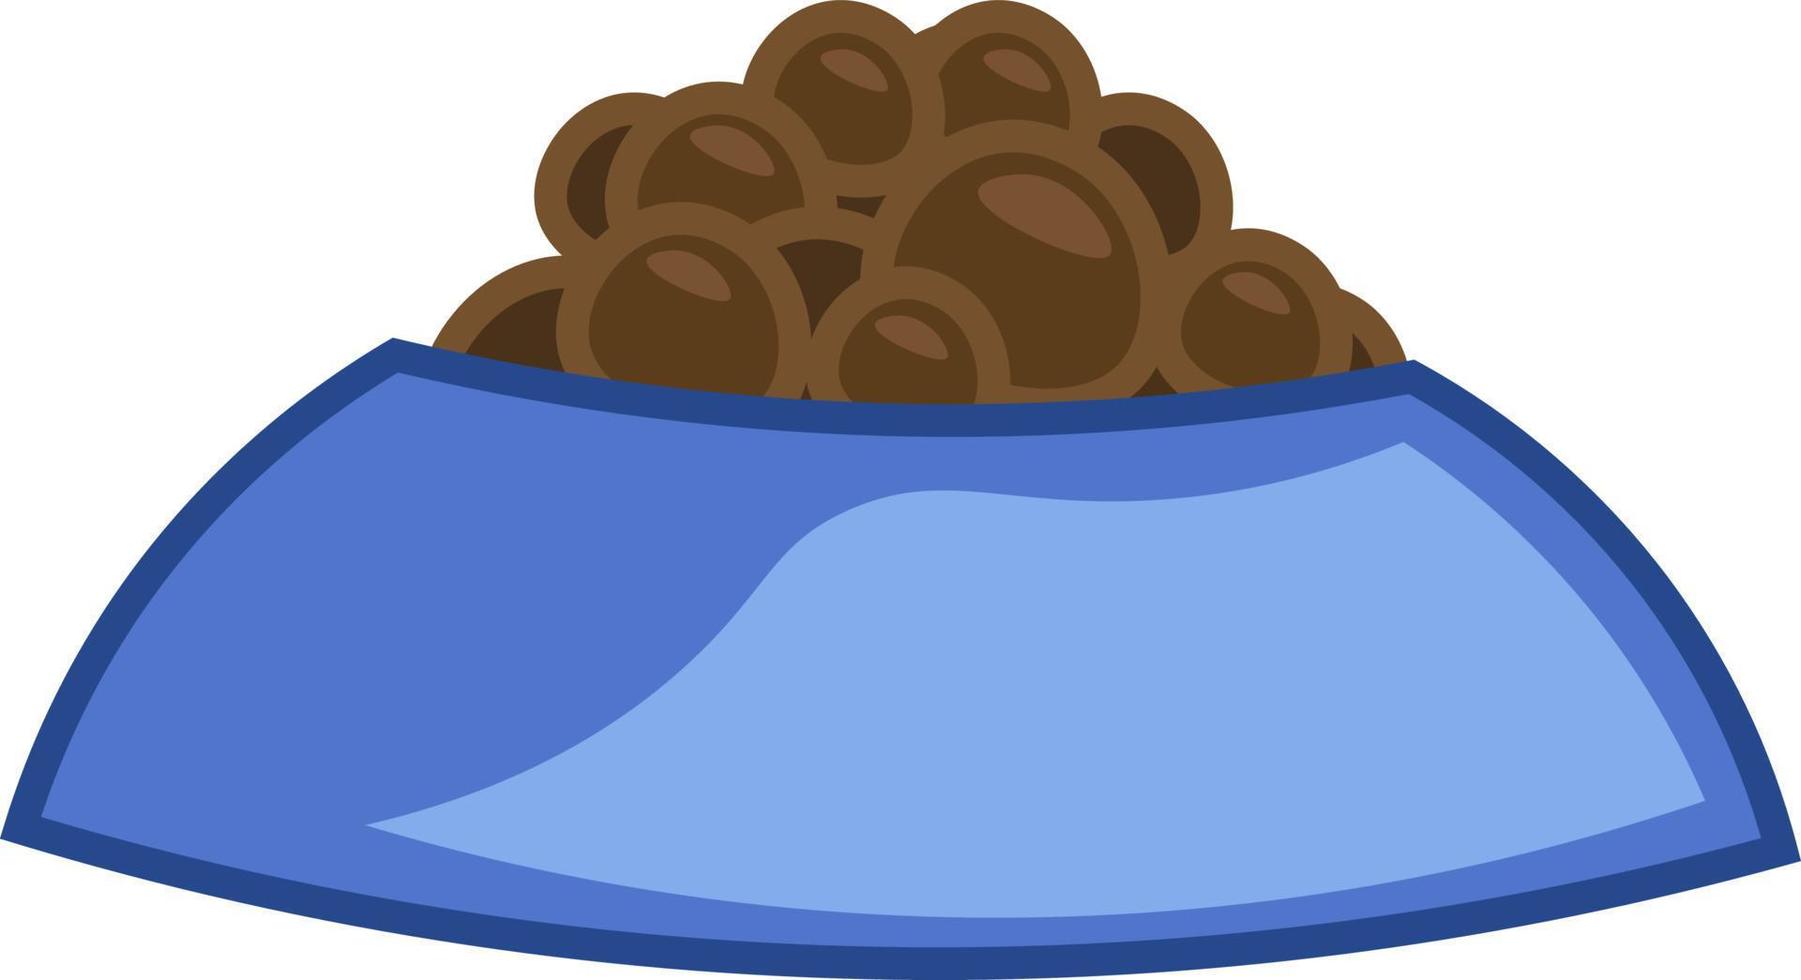 A dog food in a blue bowl, vector or color illustration.